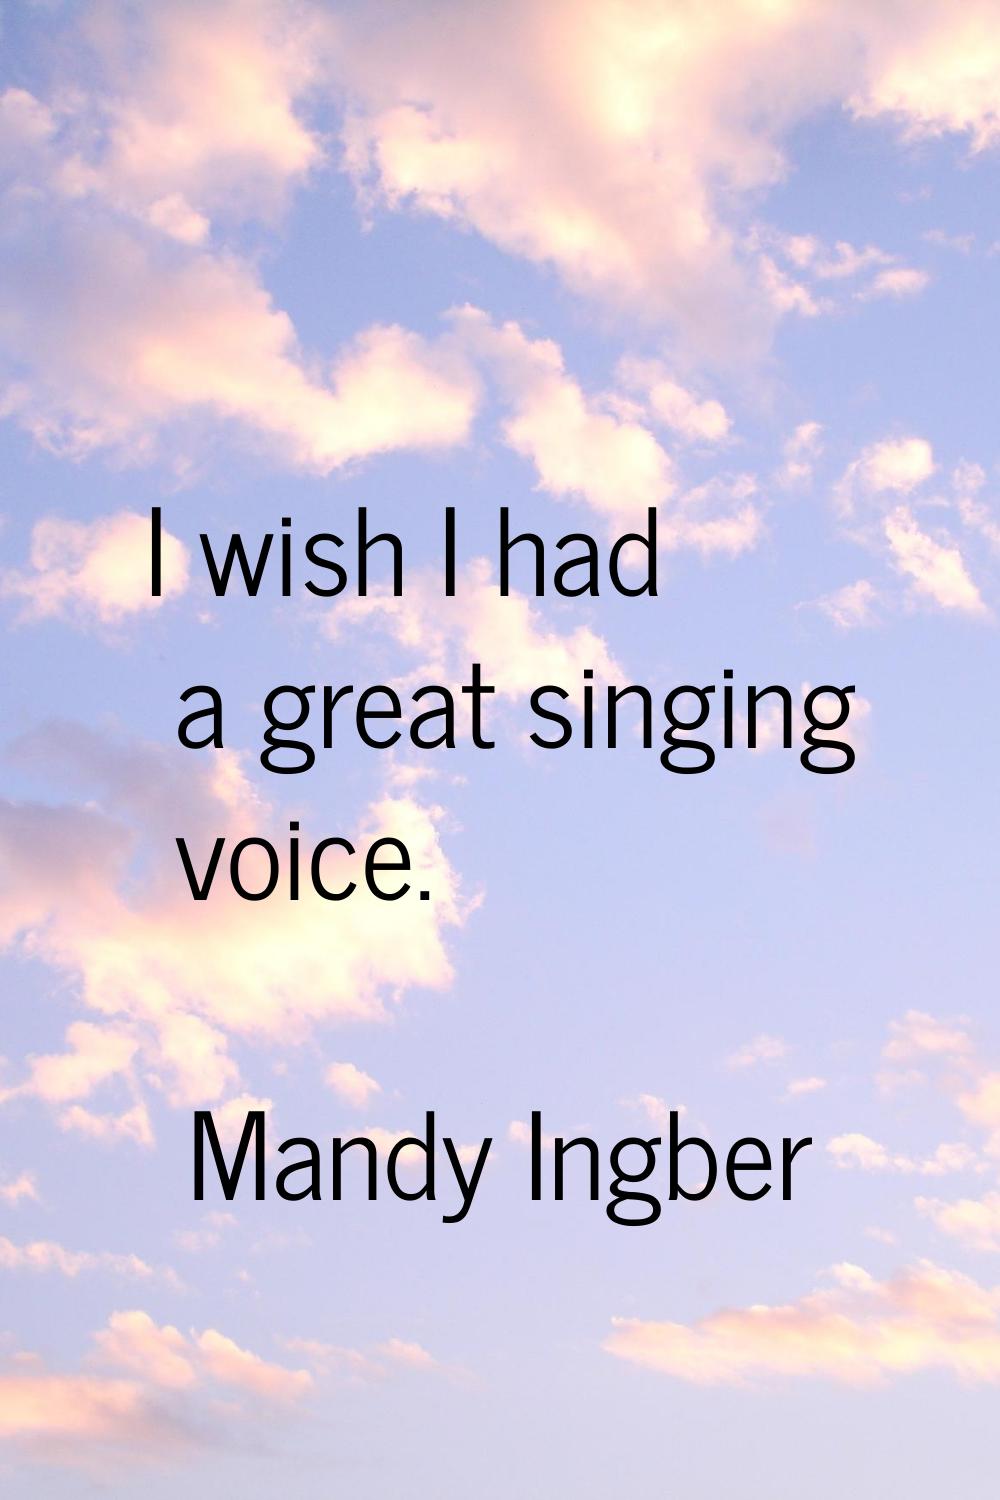 I wish I had a great singing voice.